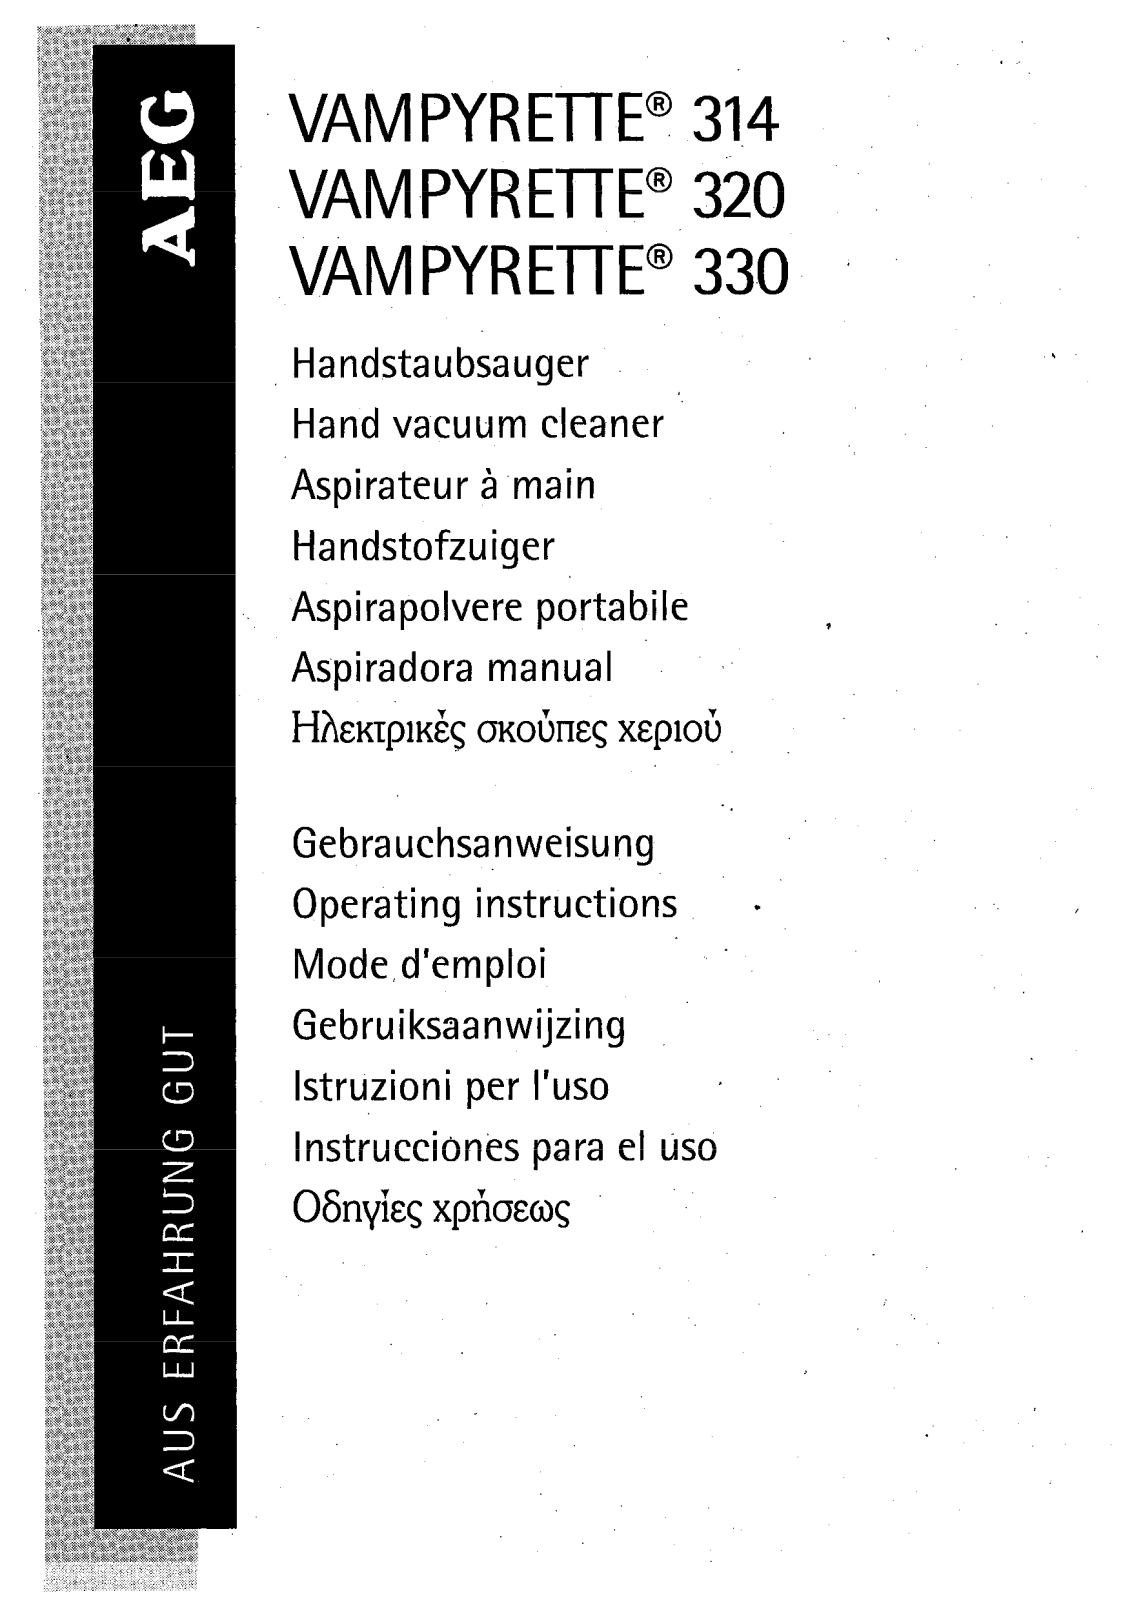 AEG VAMPYRETTE339, VAMPYRETTE334, VAMPYRETTE330, VAMPYRETTE333 Manual